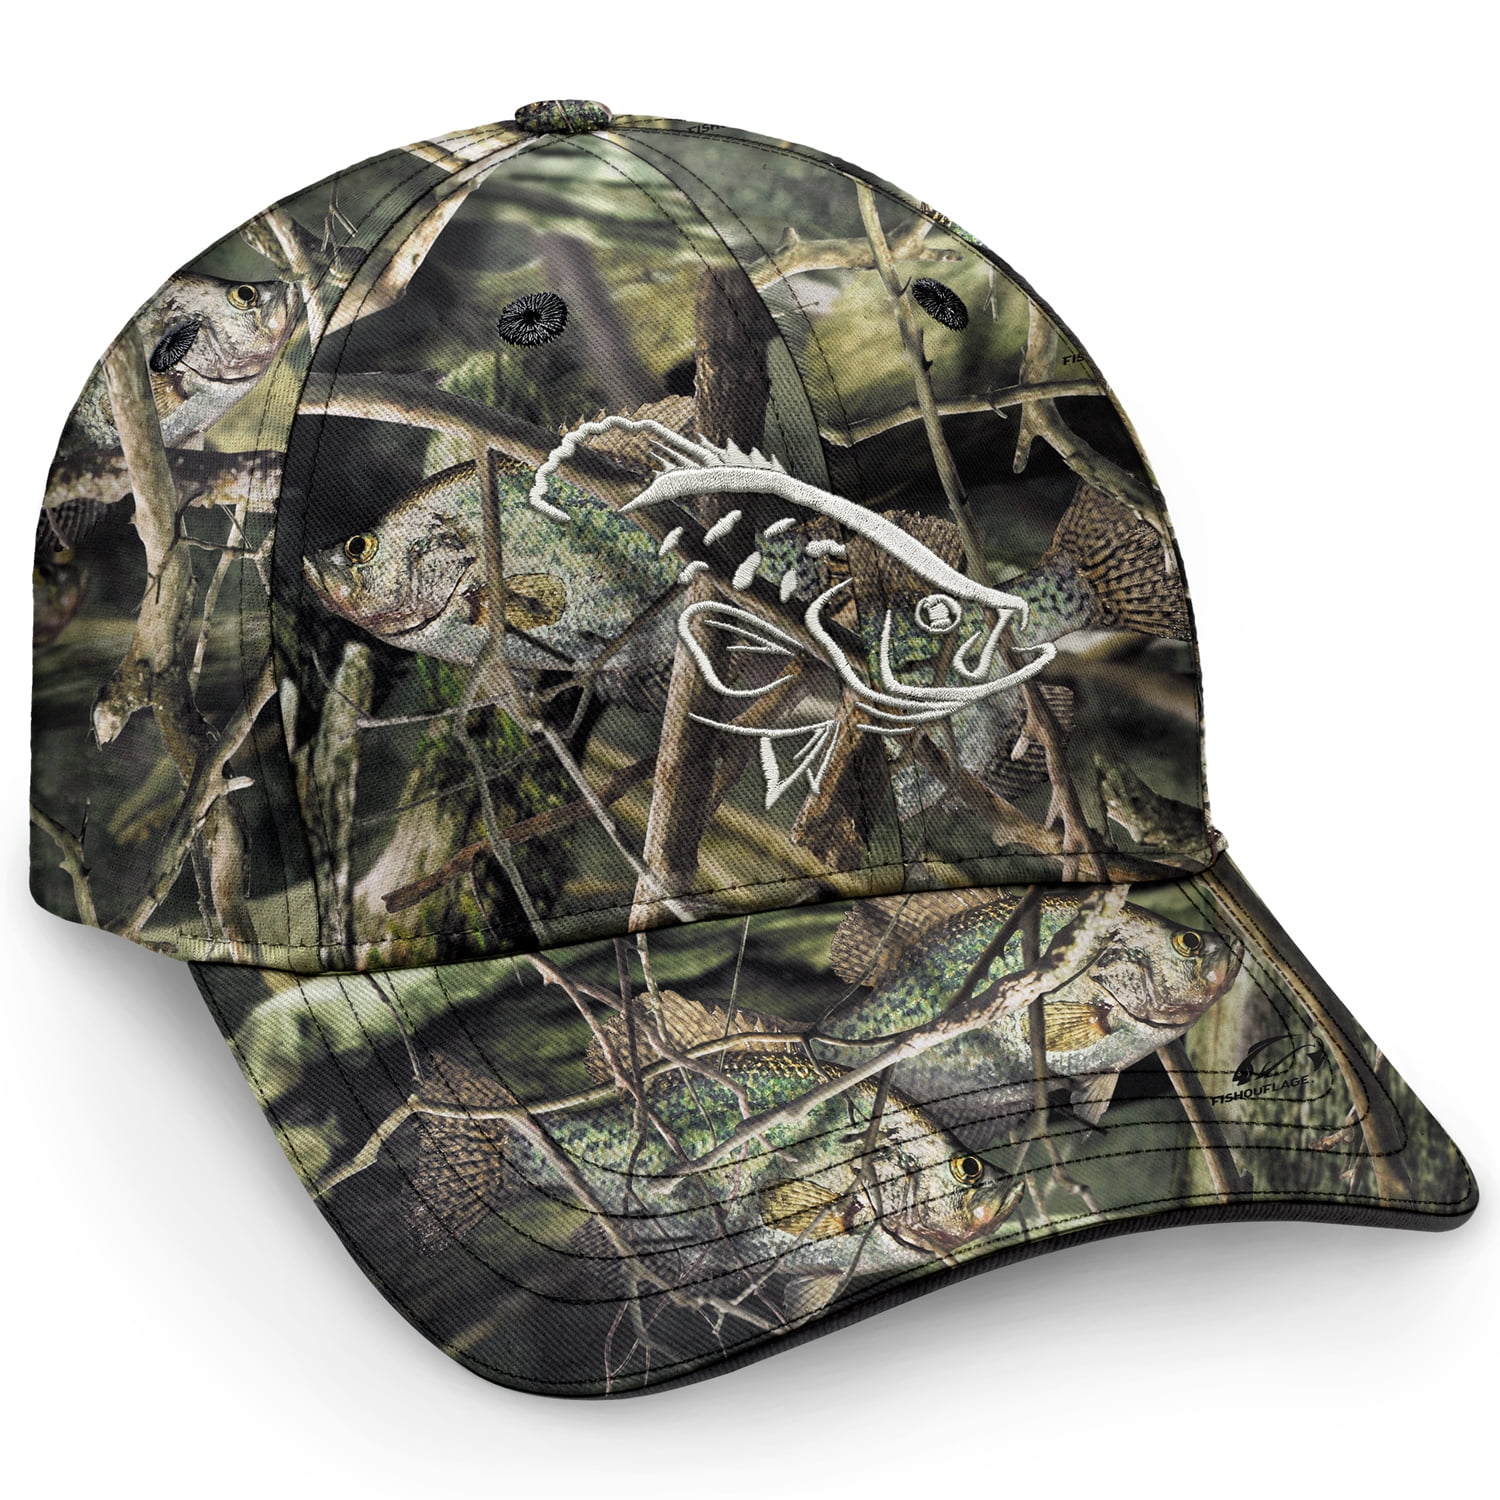 Fishouflage Camo Strike Cap- Crappie Fishing Hat (One Size